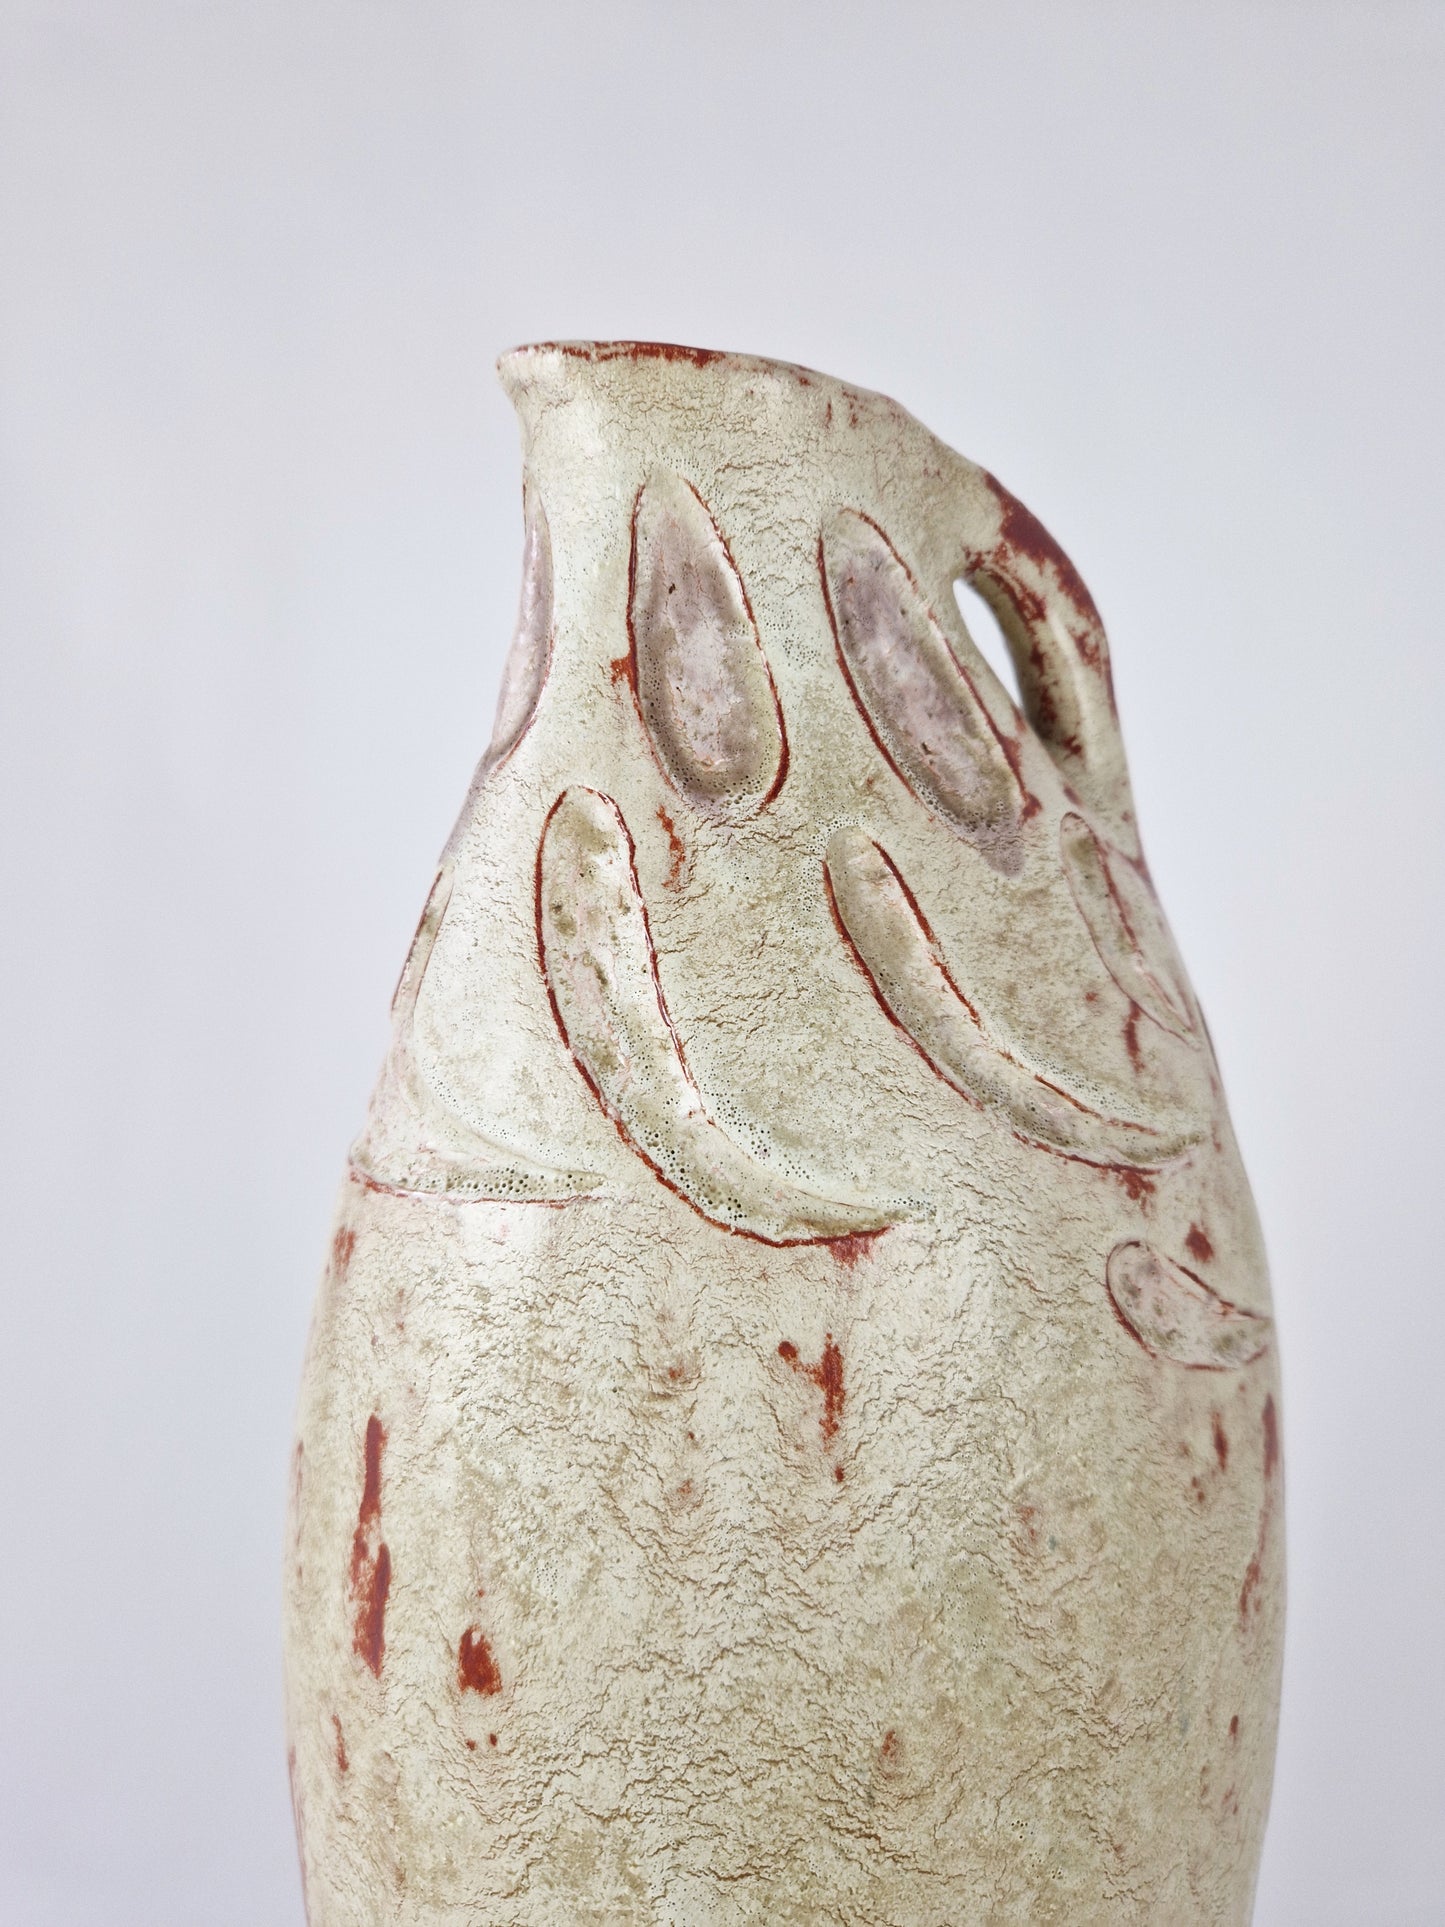 Marcel Vrancken - Vase zoomorphe en céramique